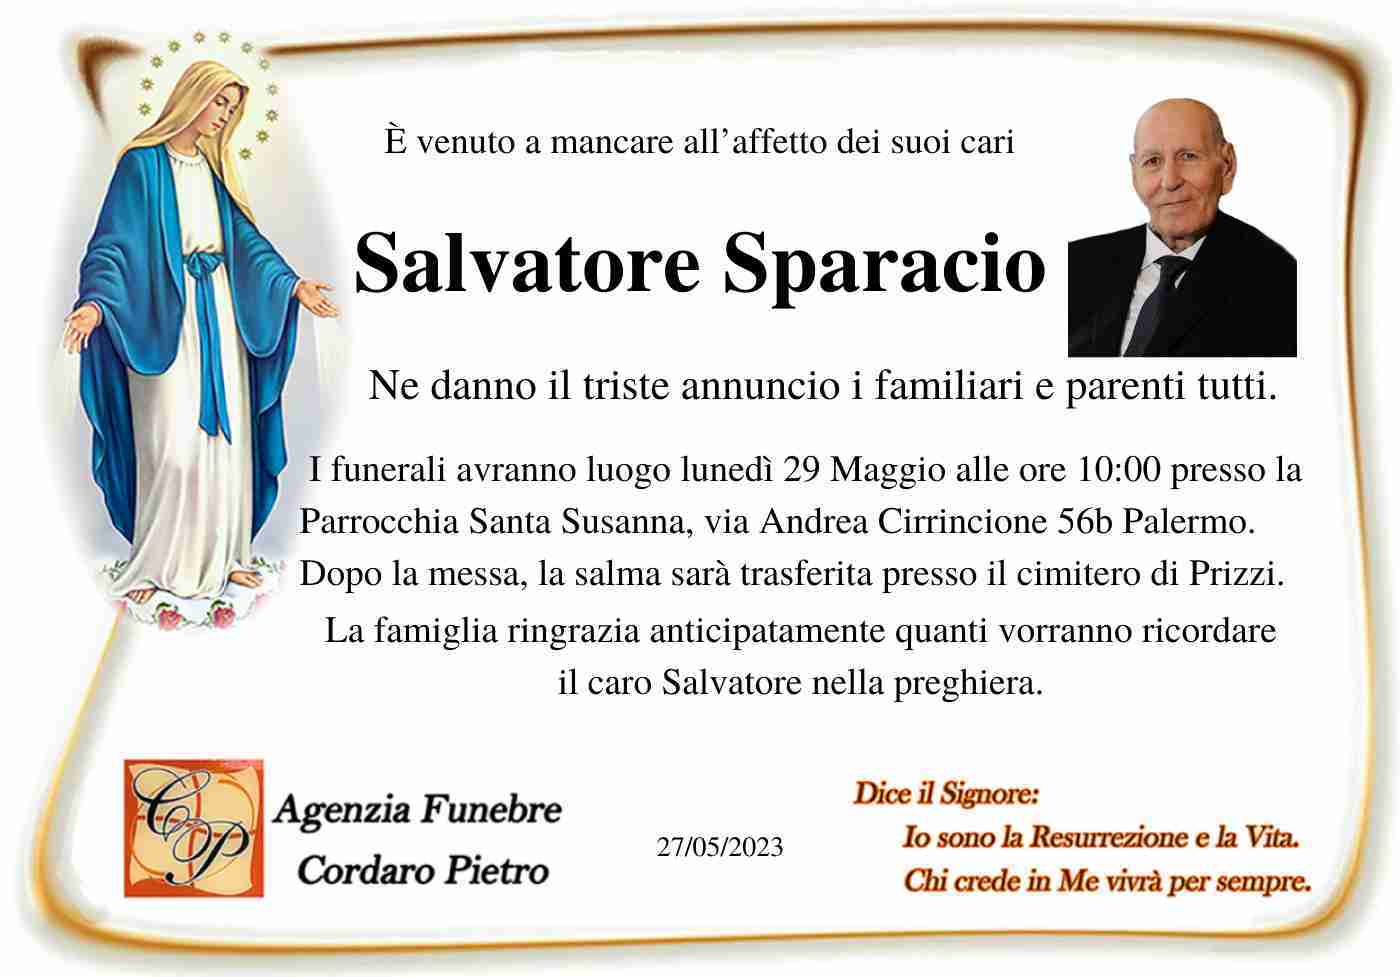 Salvatore Sparacio